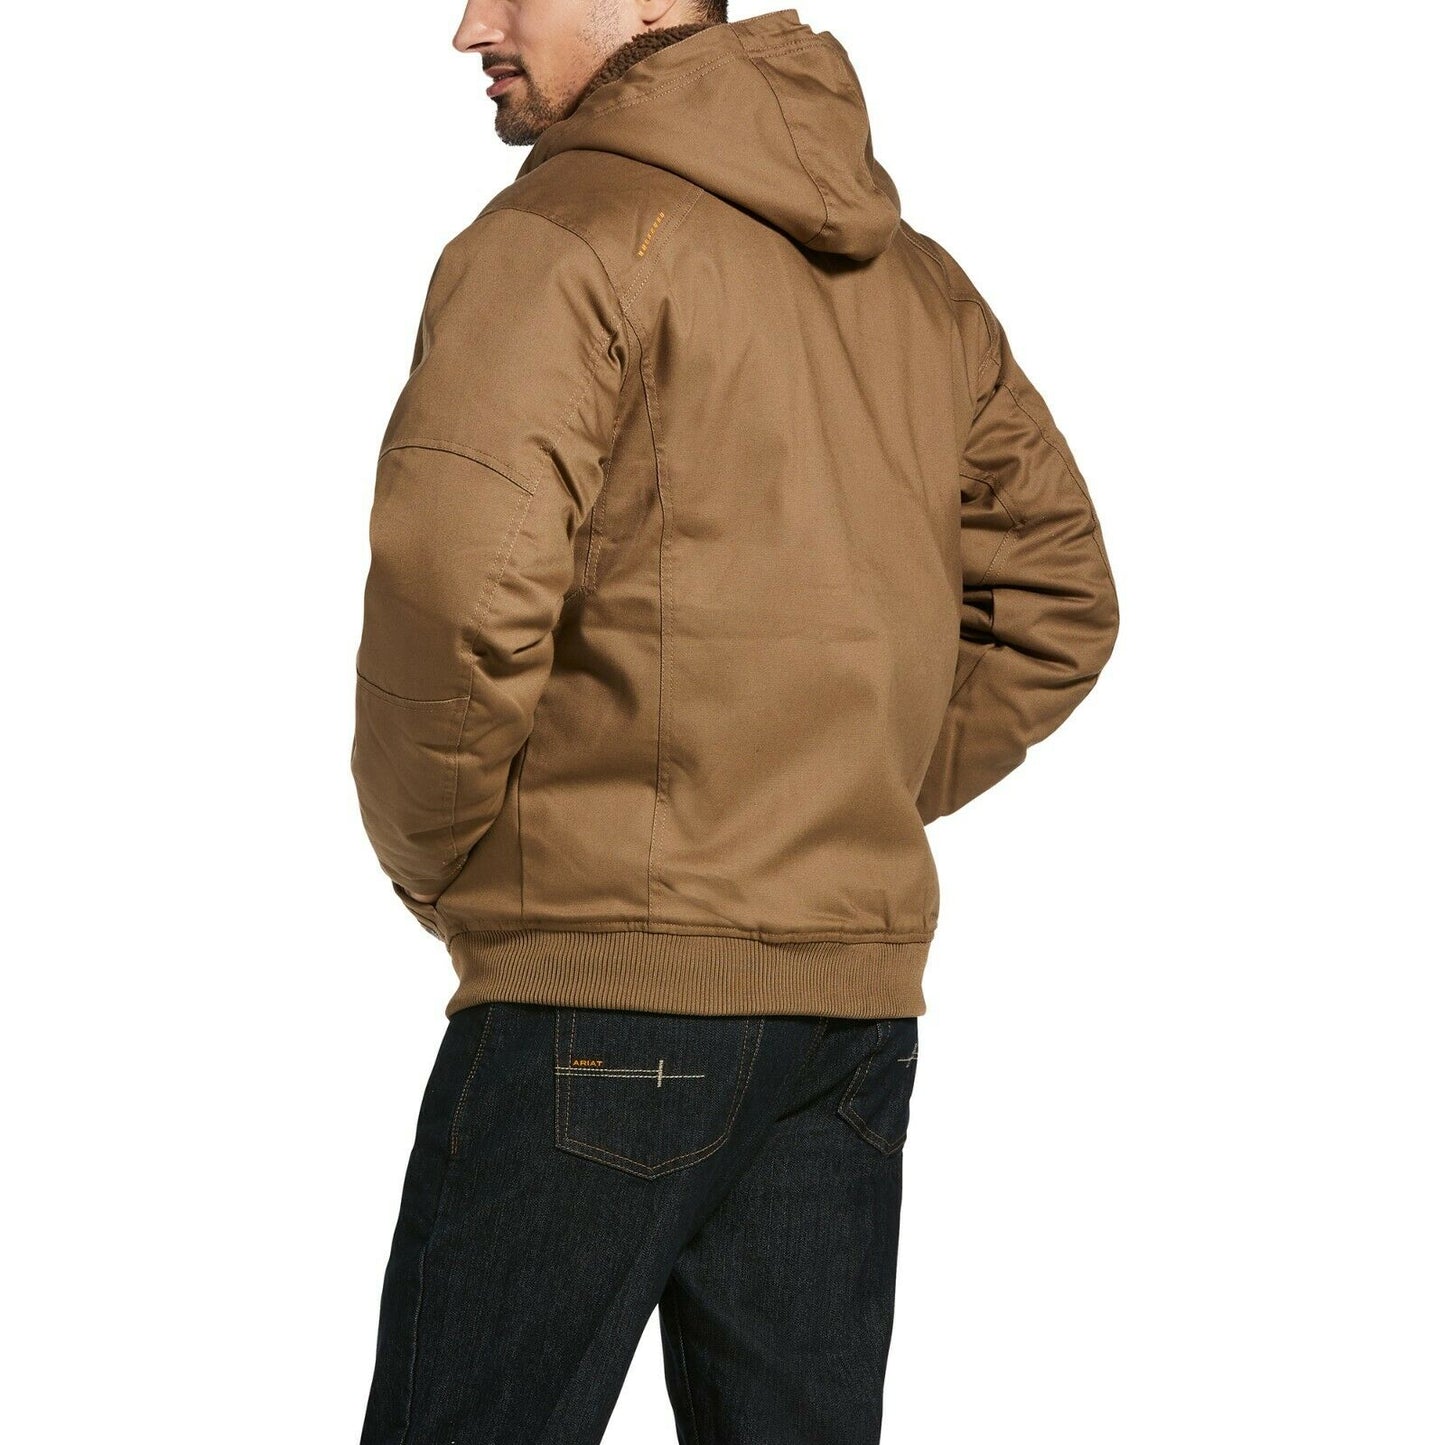 Ariat Men's Rebar DuraCanvas Field Khaki Brown Hooded Jacket